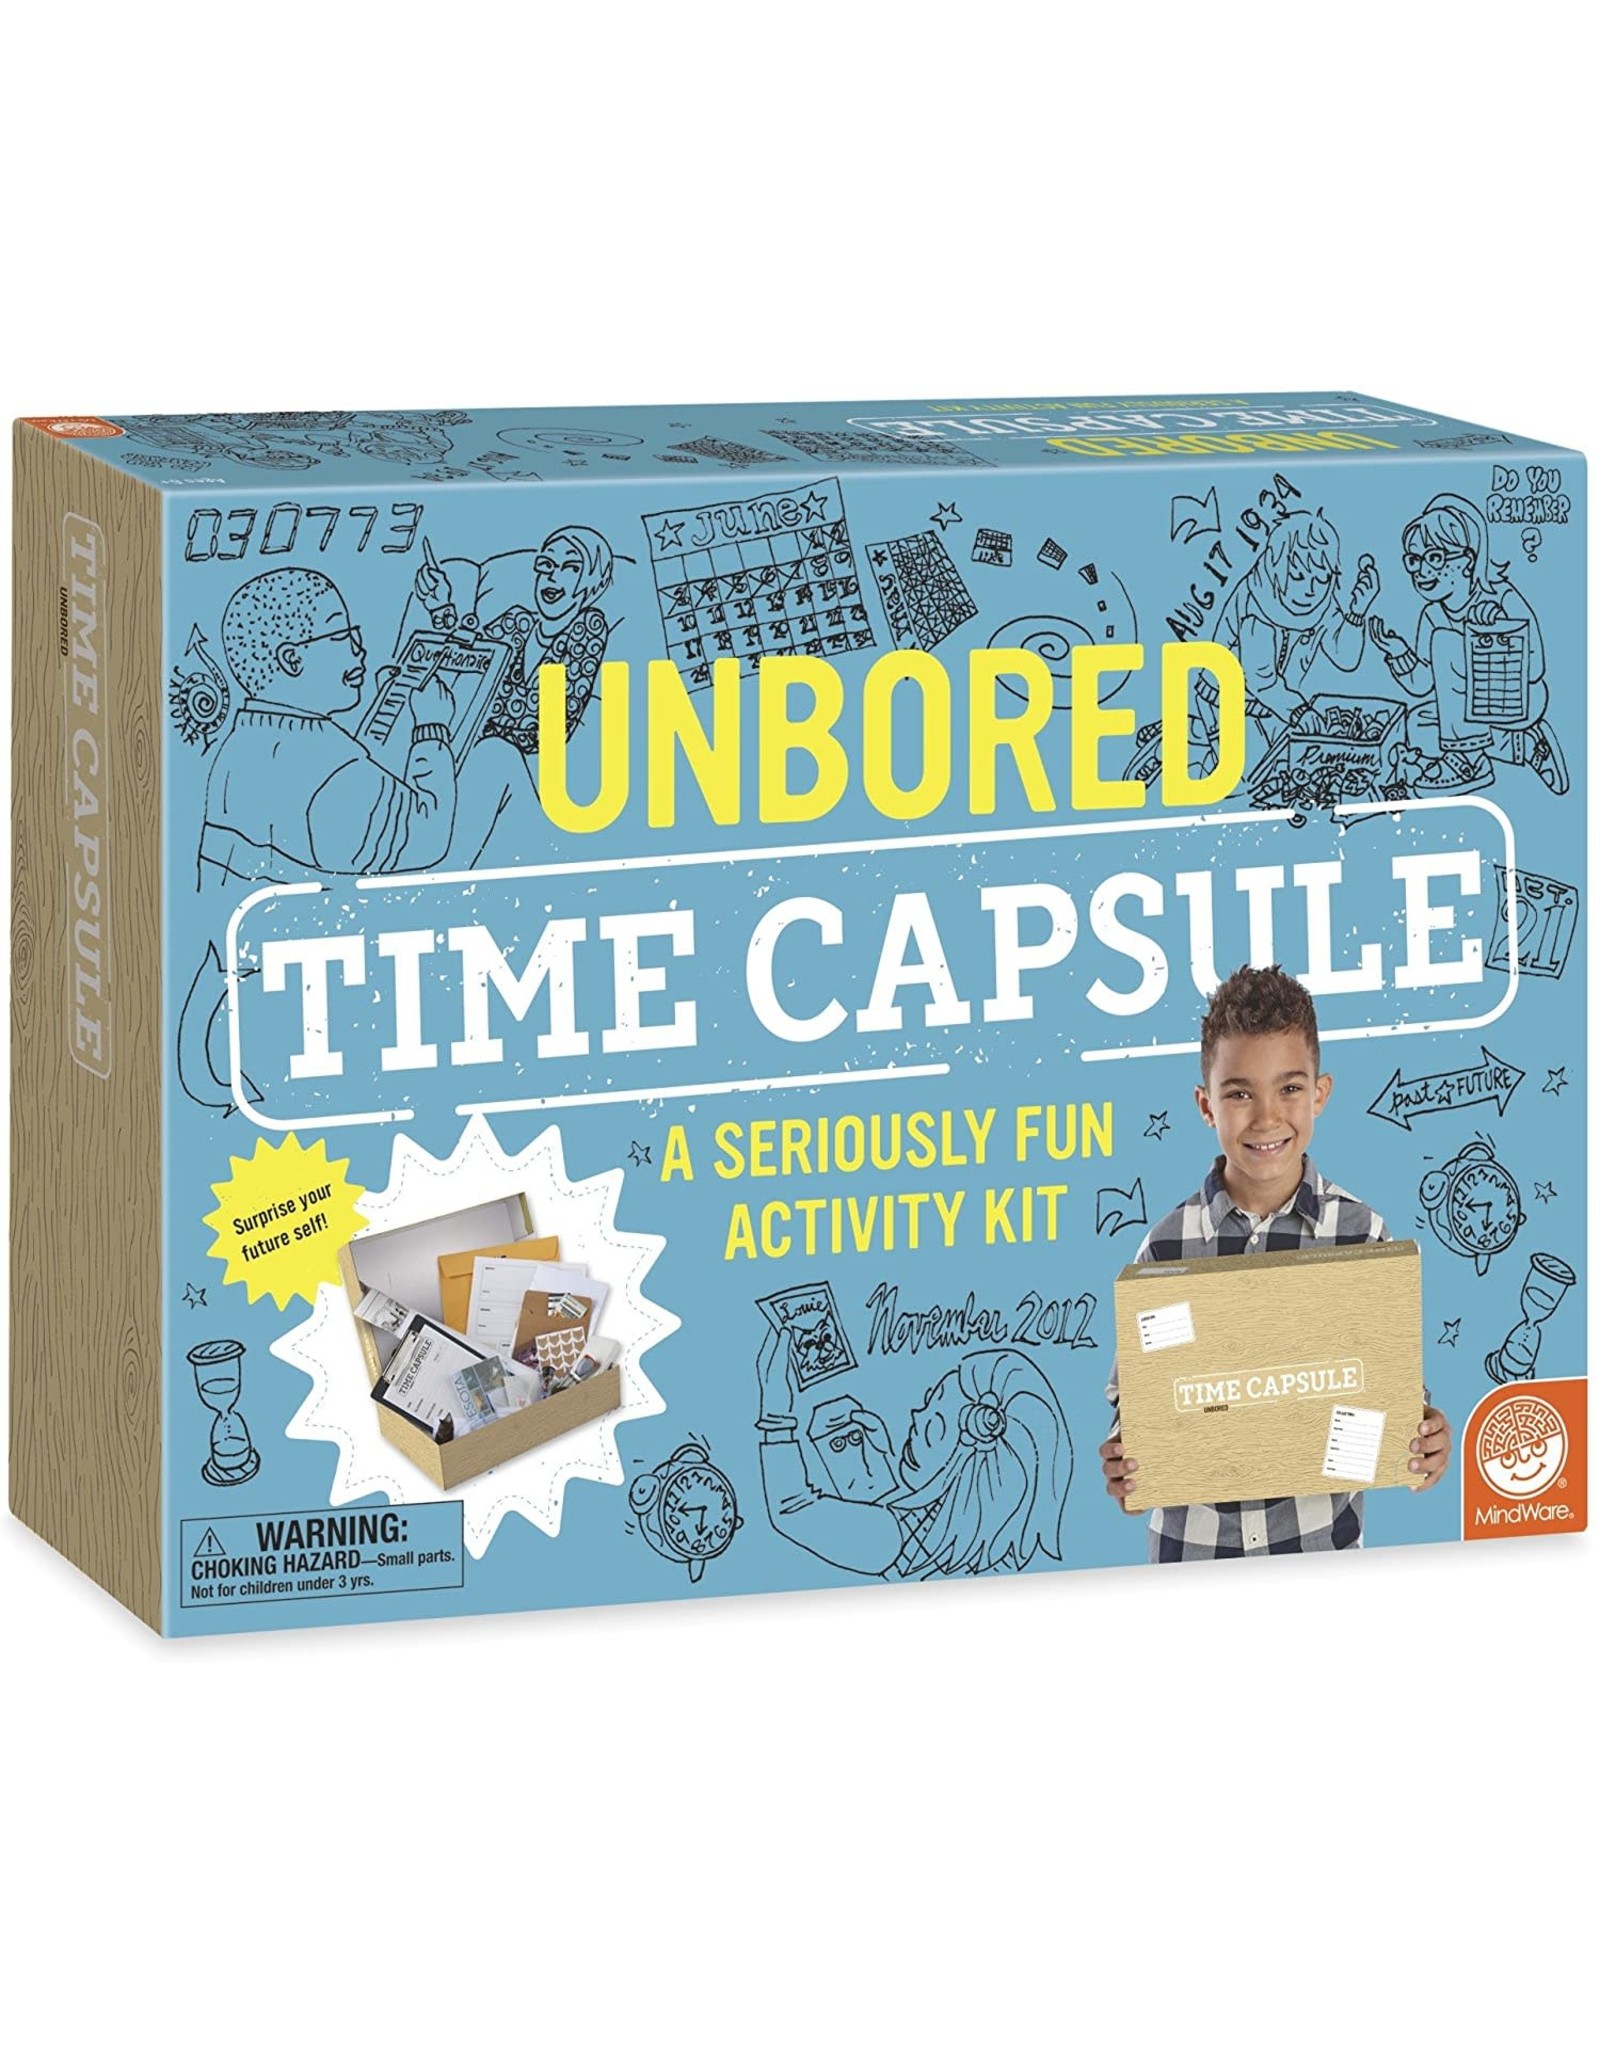 Unbored time capsule